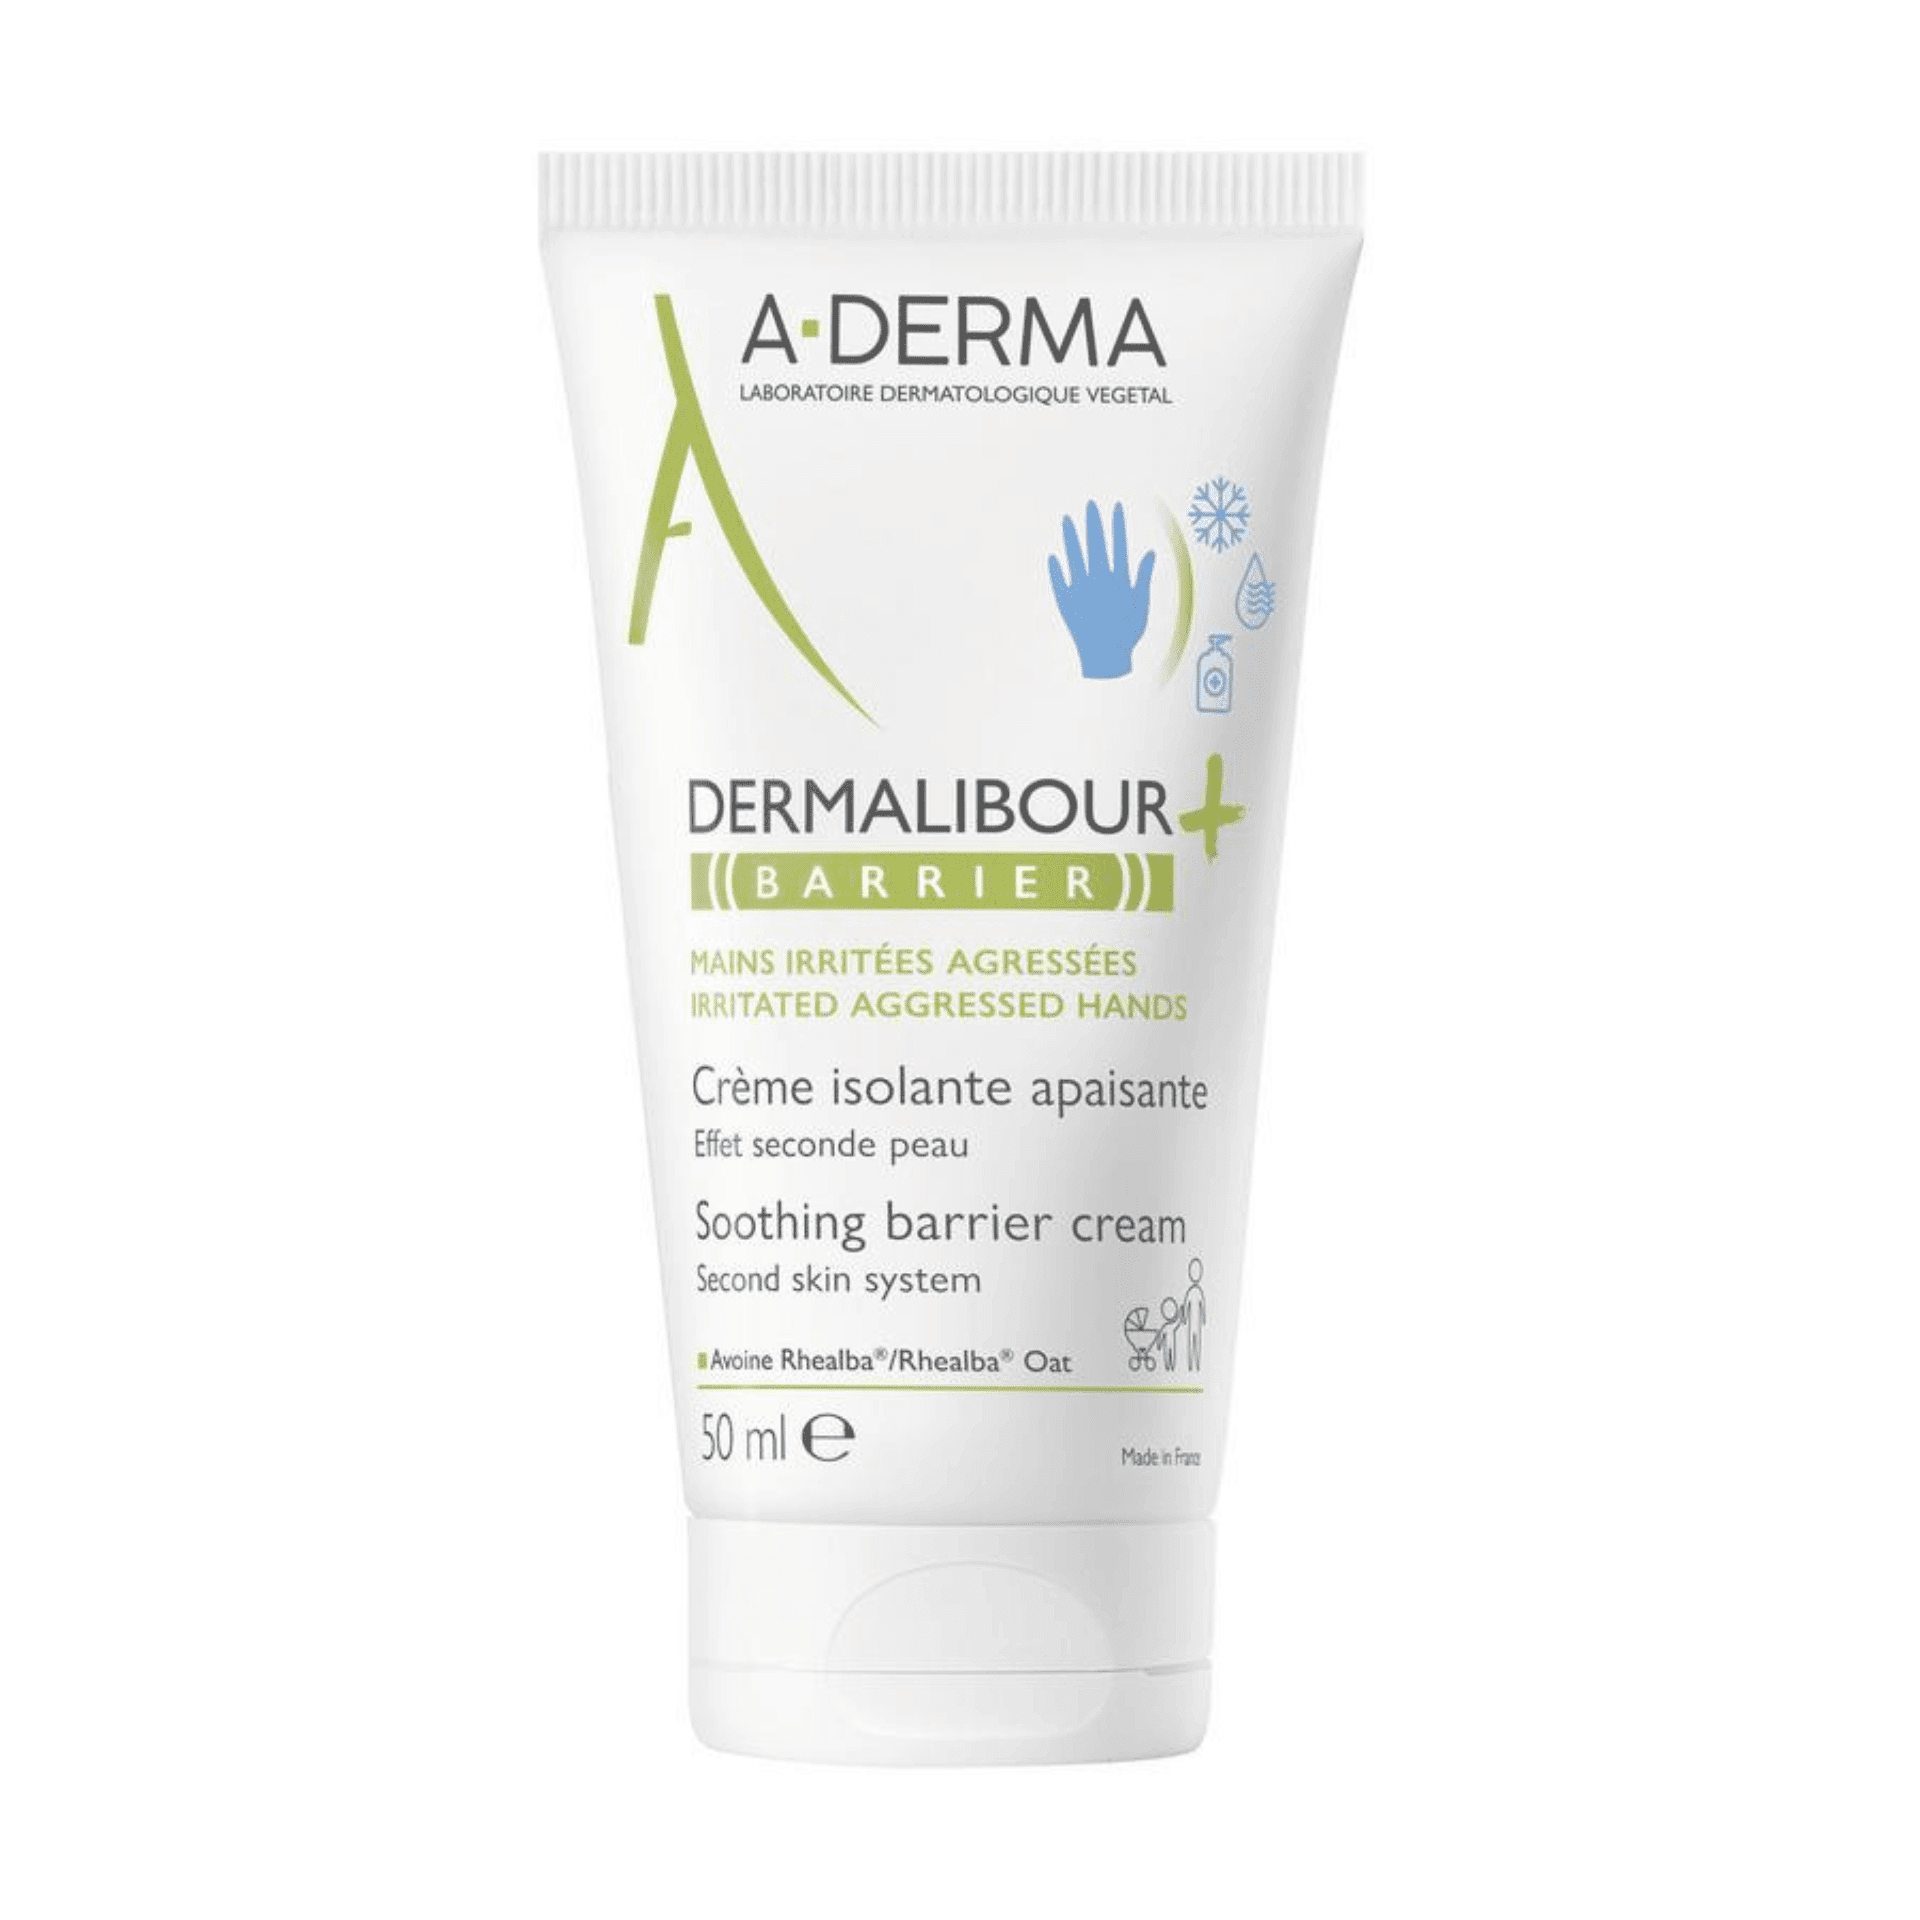 A-Derma Dermalibour+ Barrier Isolerende Crème